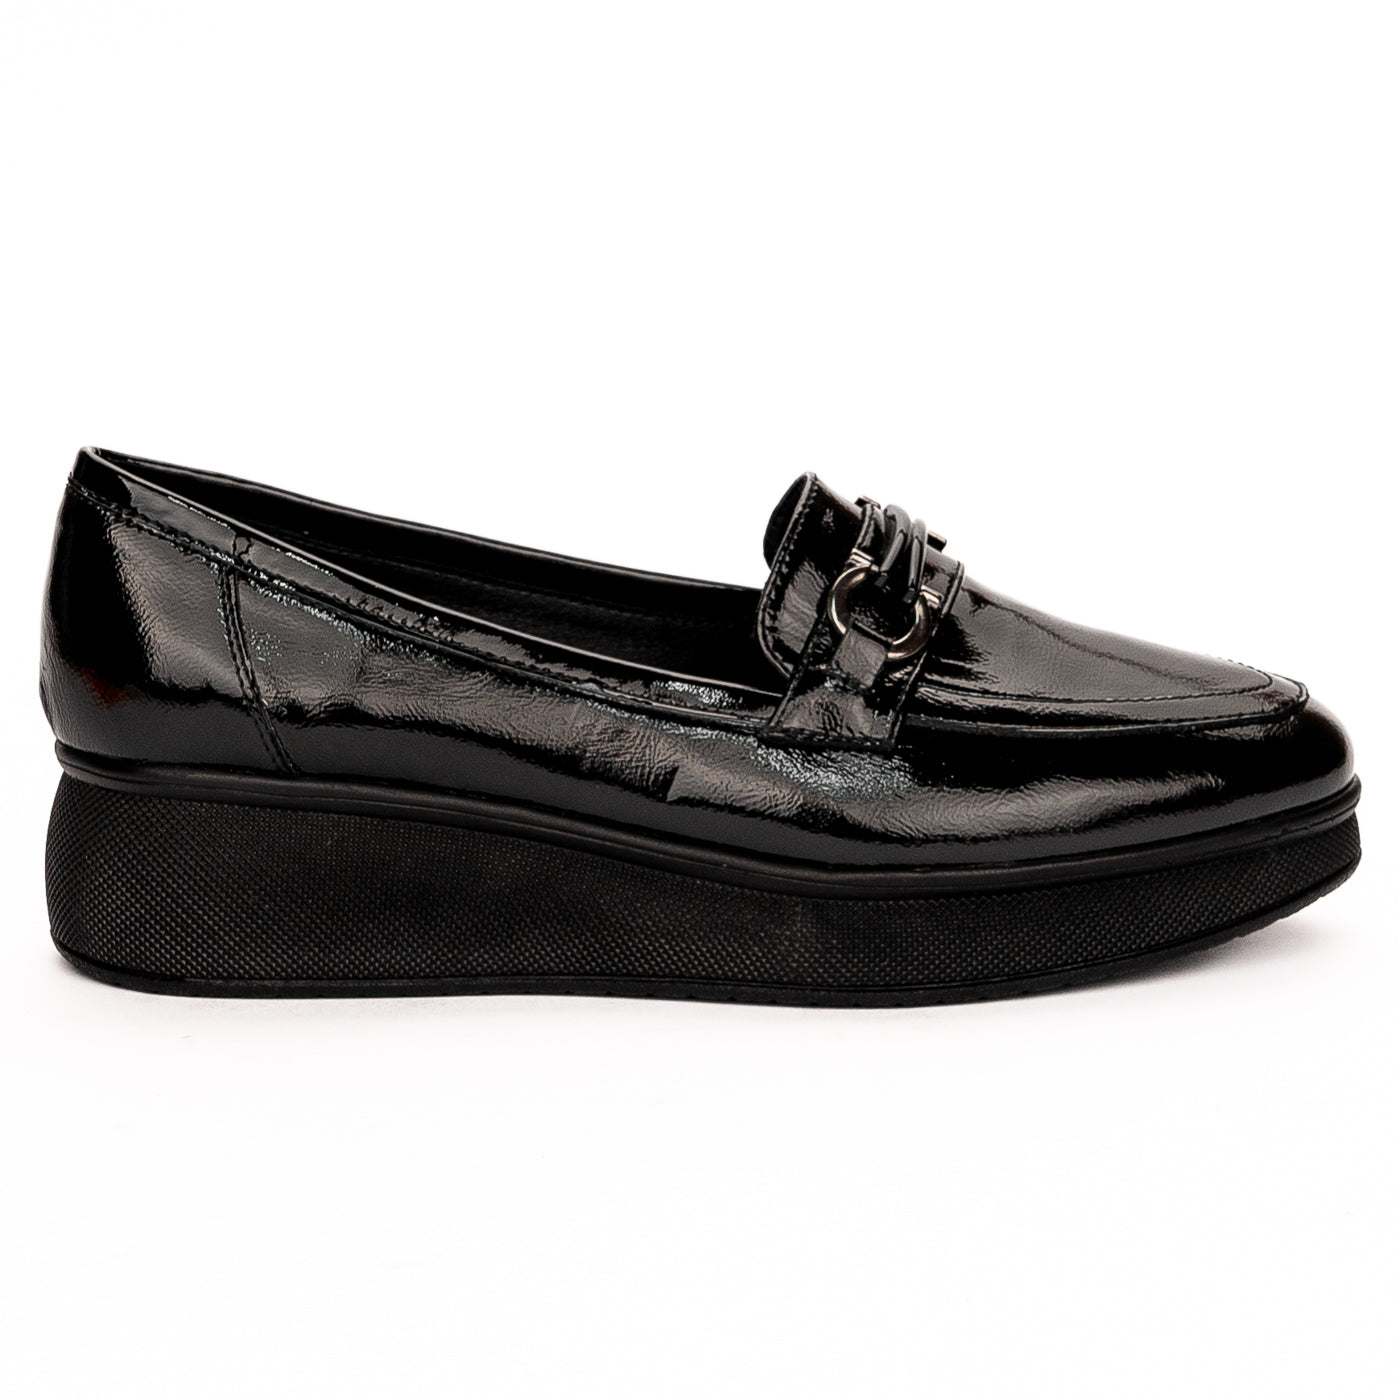 Pantofi dama din piele naturala neagra cu talpa ortopedica 13263